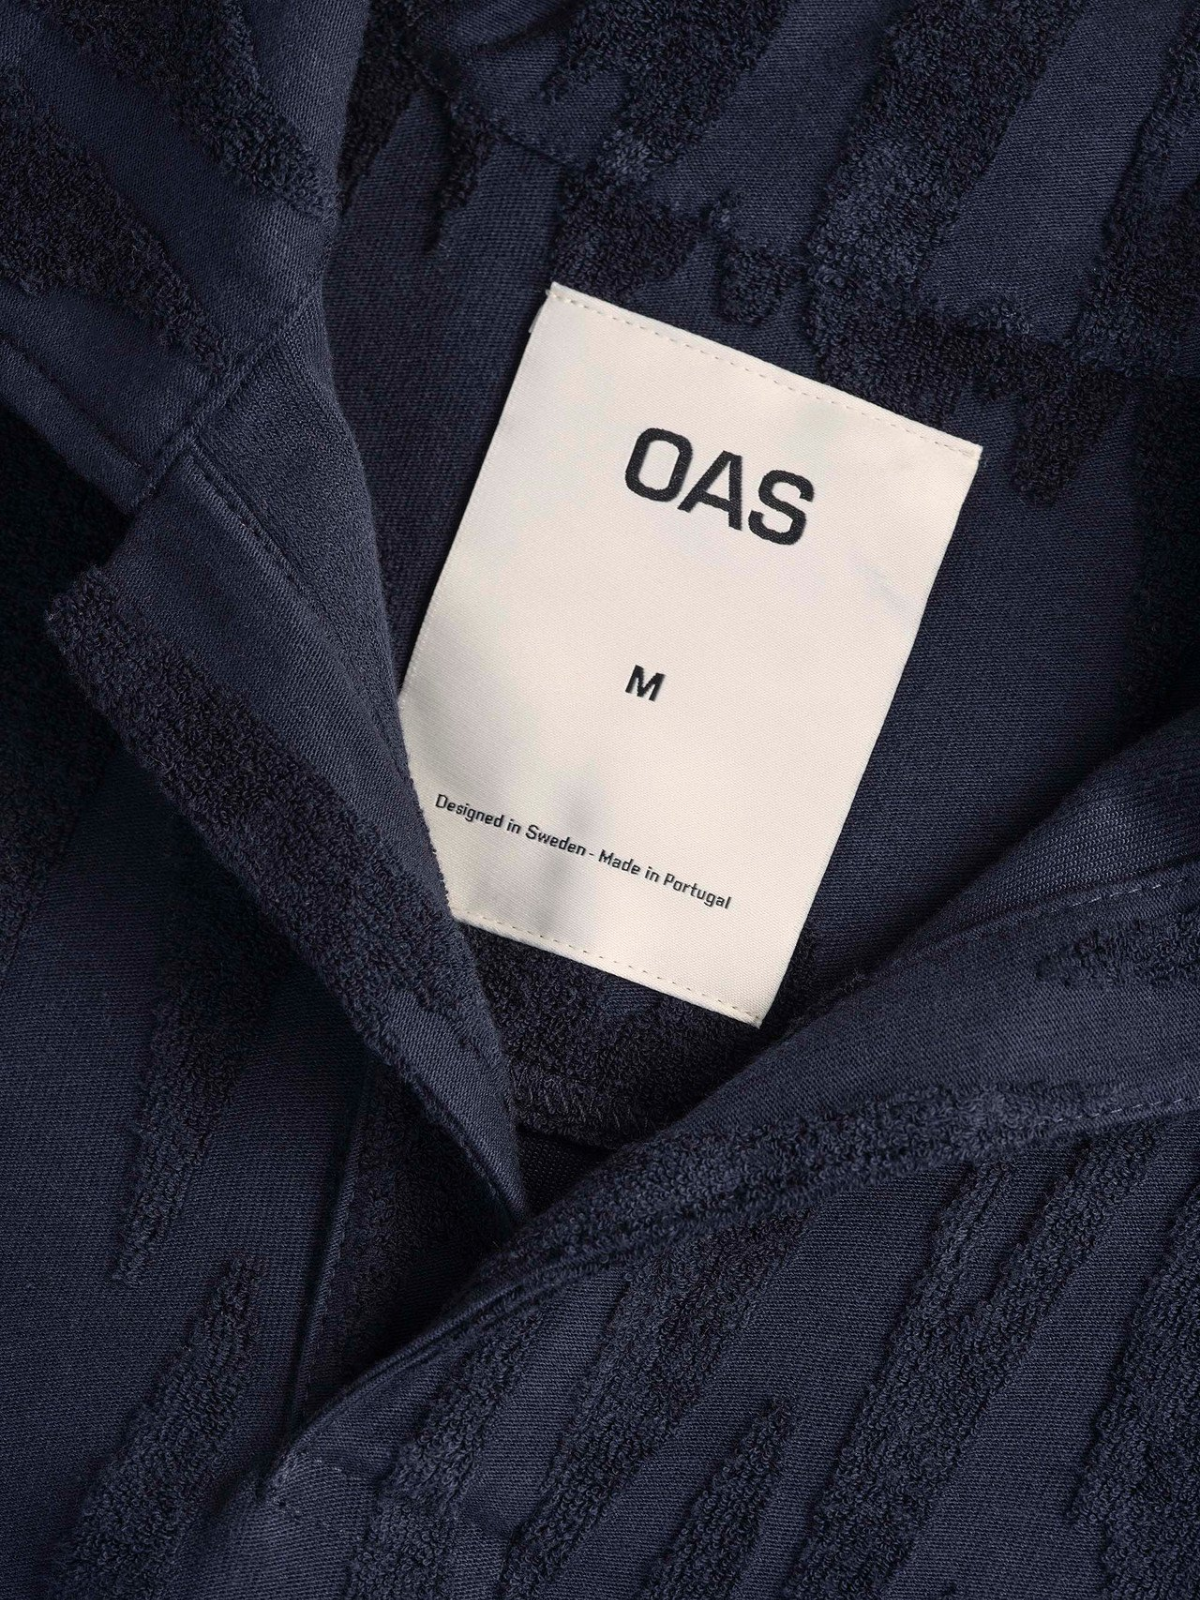 oas glitch terry cotton polyester blend polo shirt navy blue kempt athens ga georgia men's clothing store